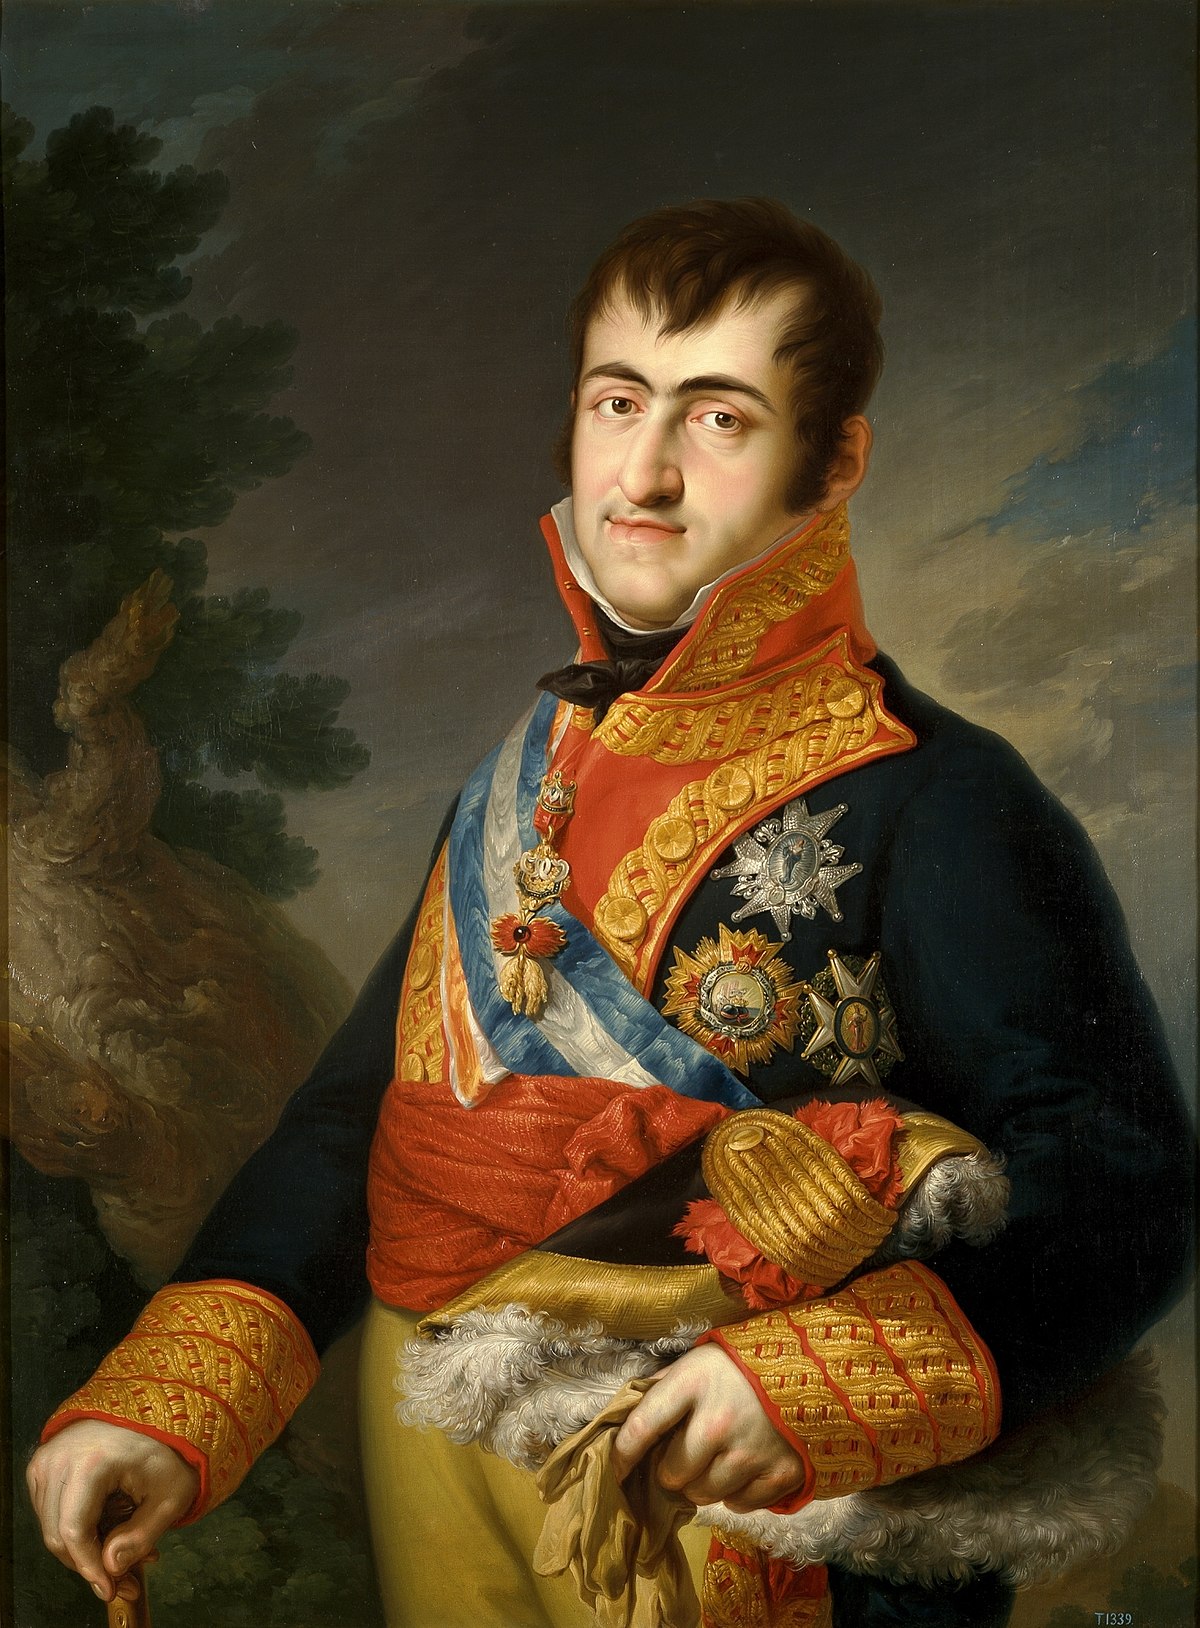 King Ferdinand VII Amidst the Turmoil of Revolution